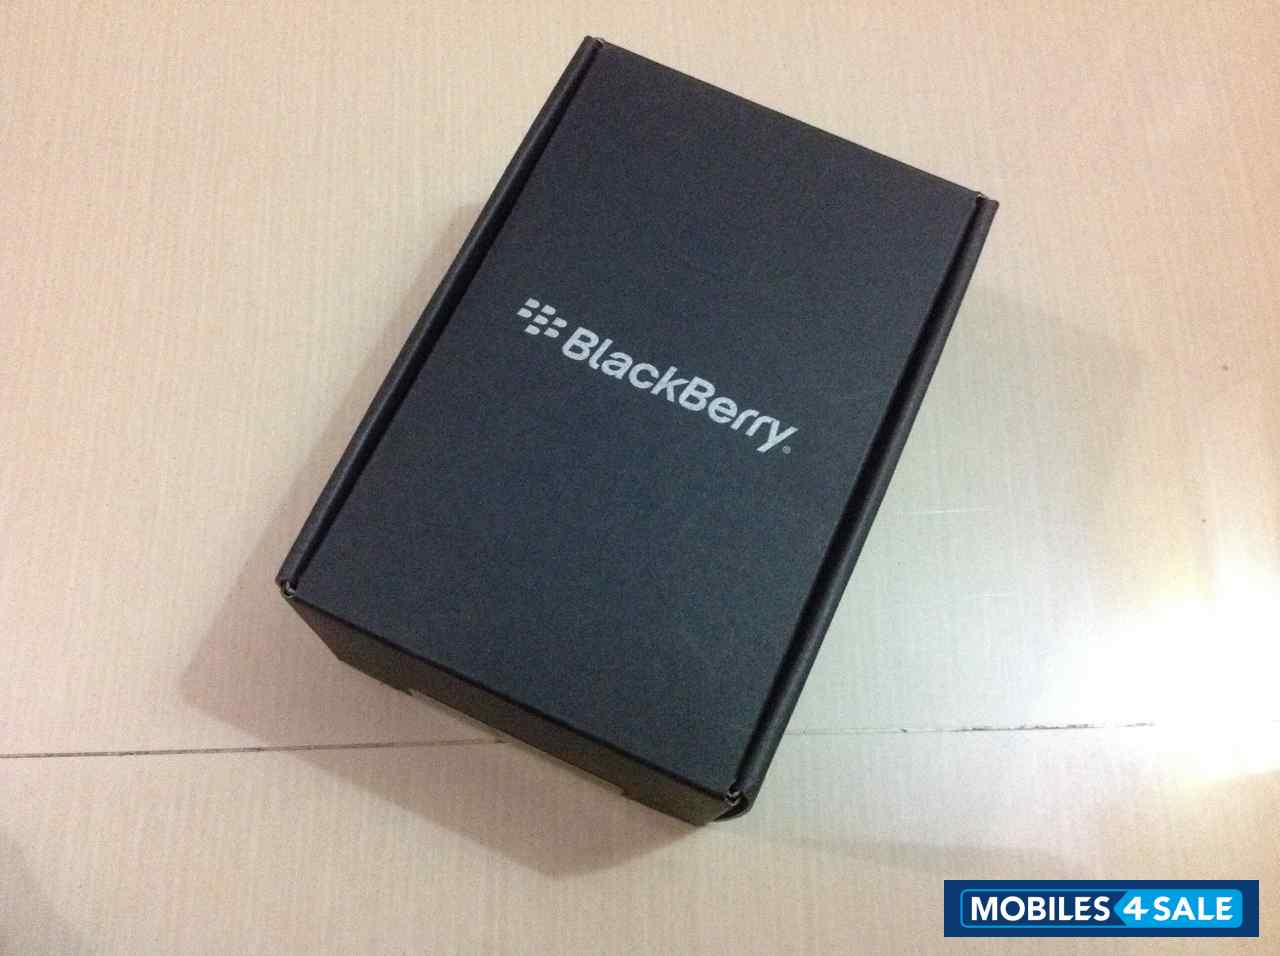 Zinc Grey BlackBerry Torch 9810